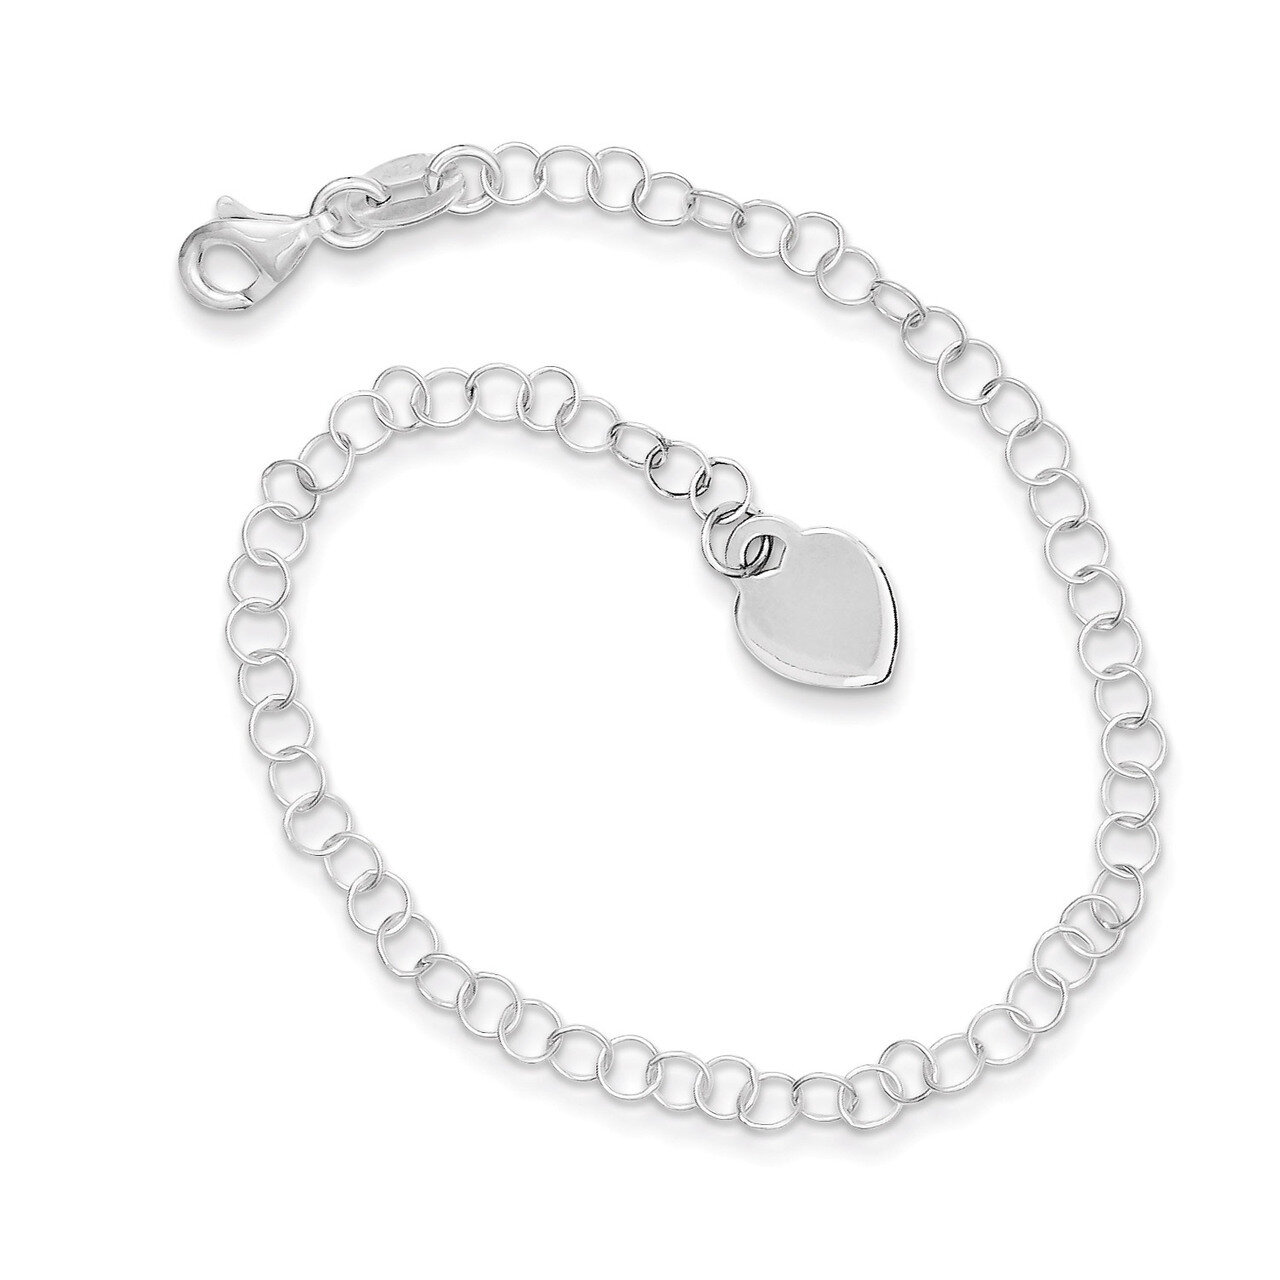 6 Inch Heart Charm Childs Bracelet Sterling Silver QG1450-6